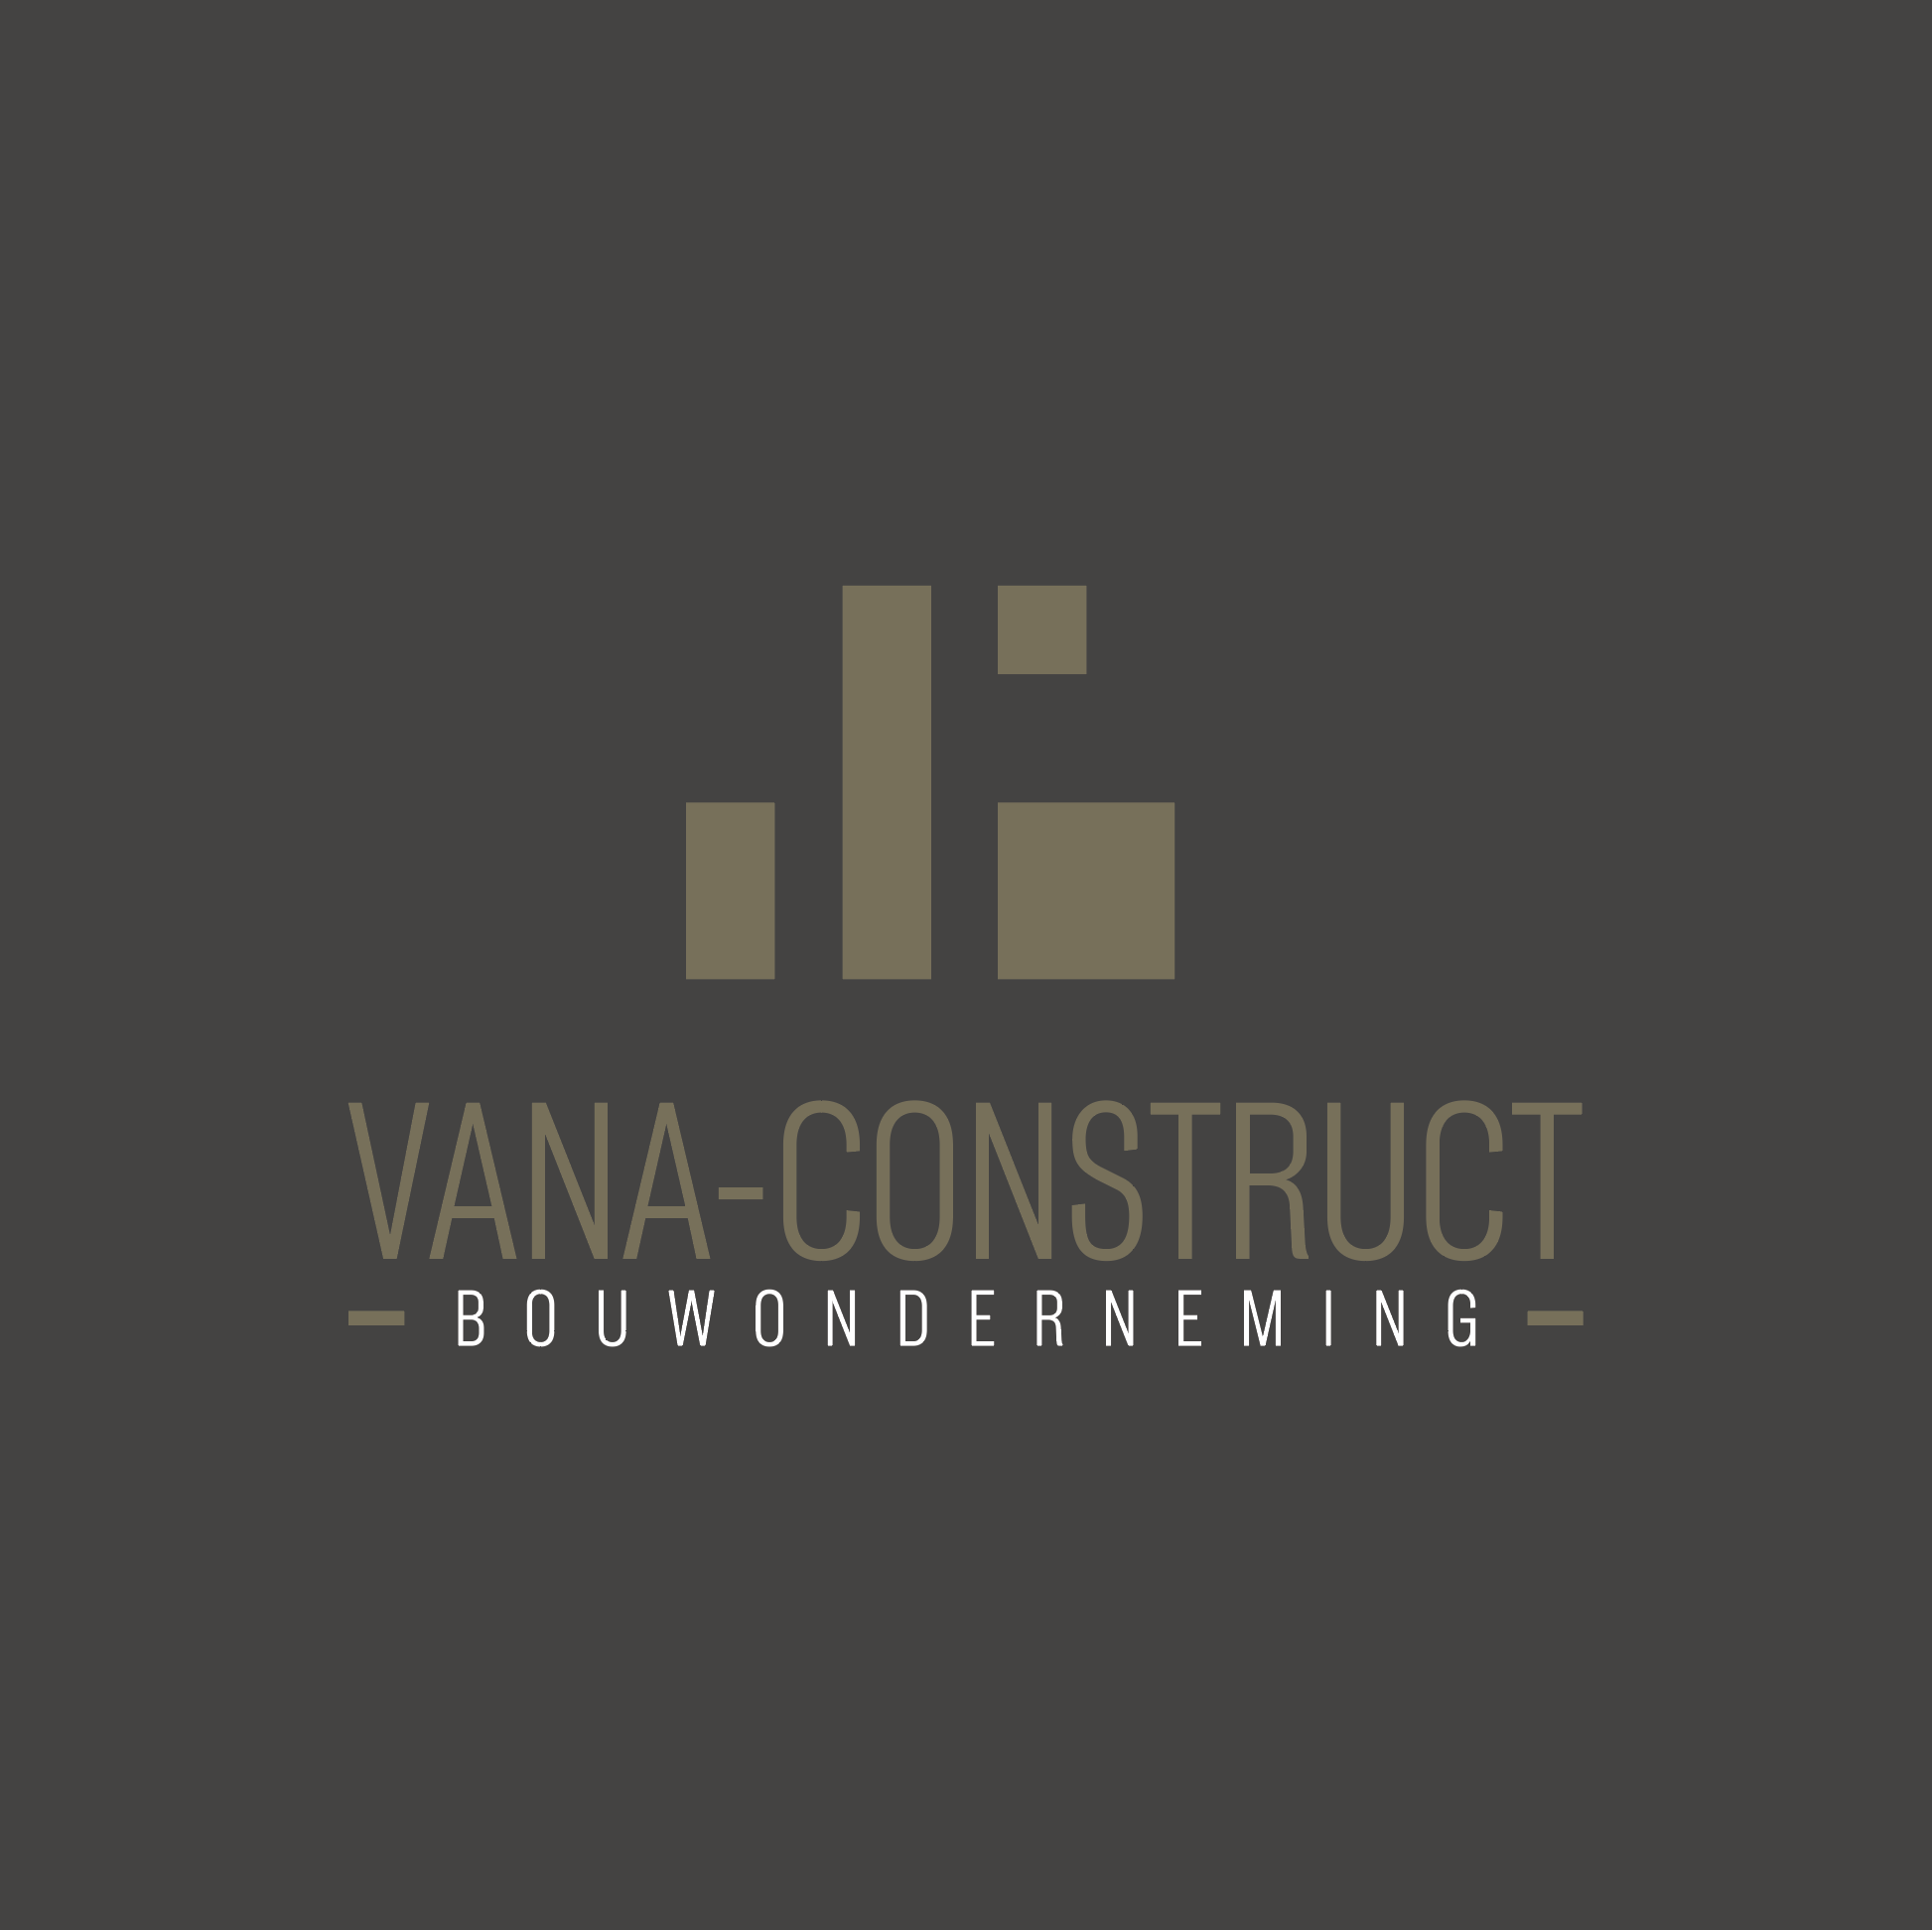 VANA-CONSTRUCT